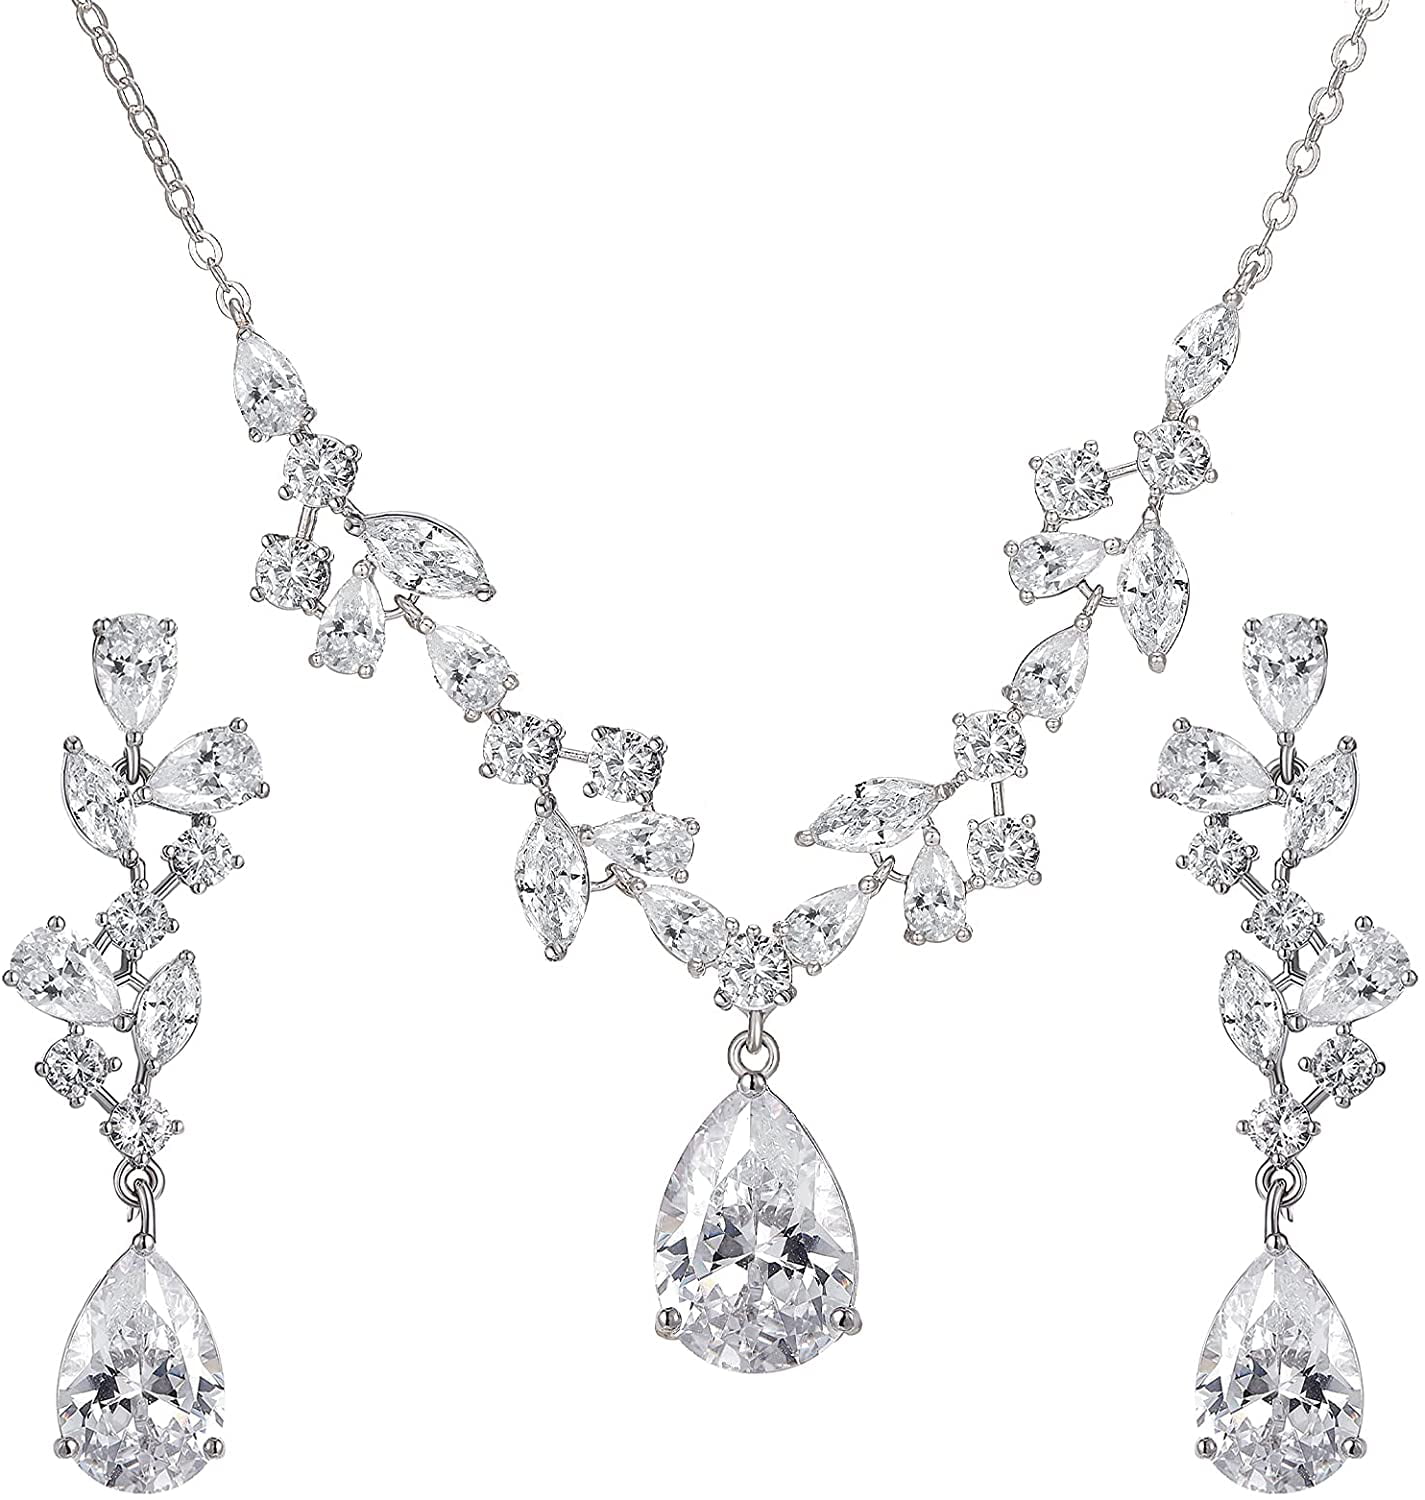 UDORA CZ Tearsdrop Earrings Necklace Jewelry Set for Bride Bridesmaids 